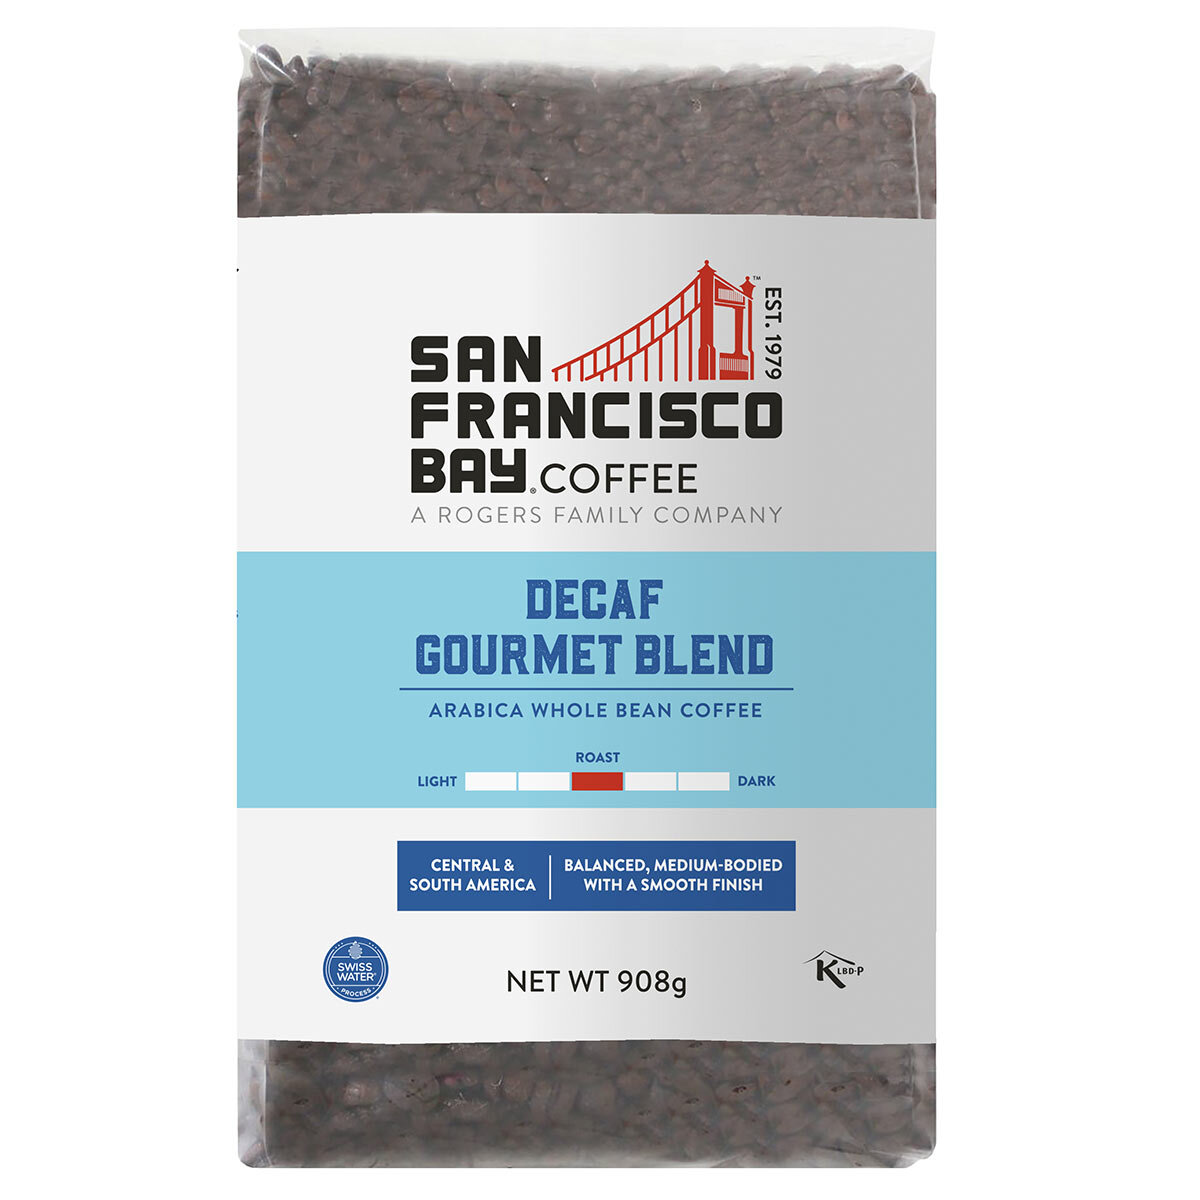 San Francisco Bay Decaf Gourmet Blend Whole Bean Coffee, 908g